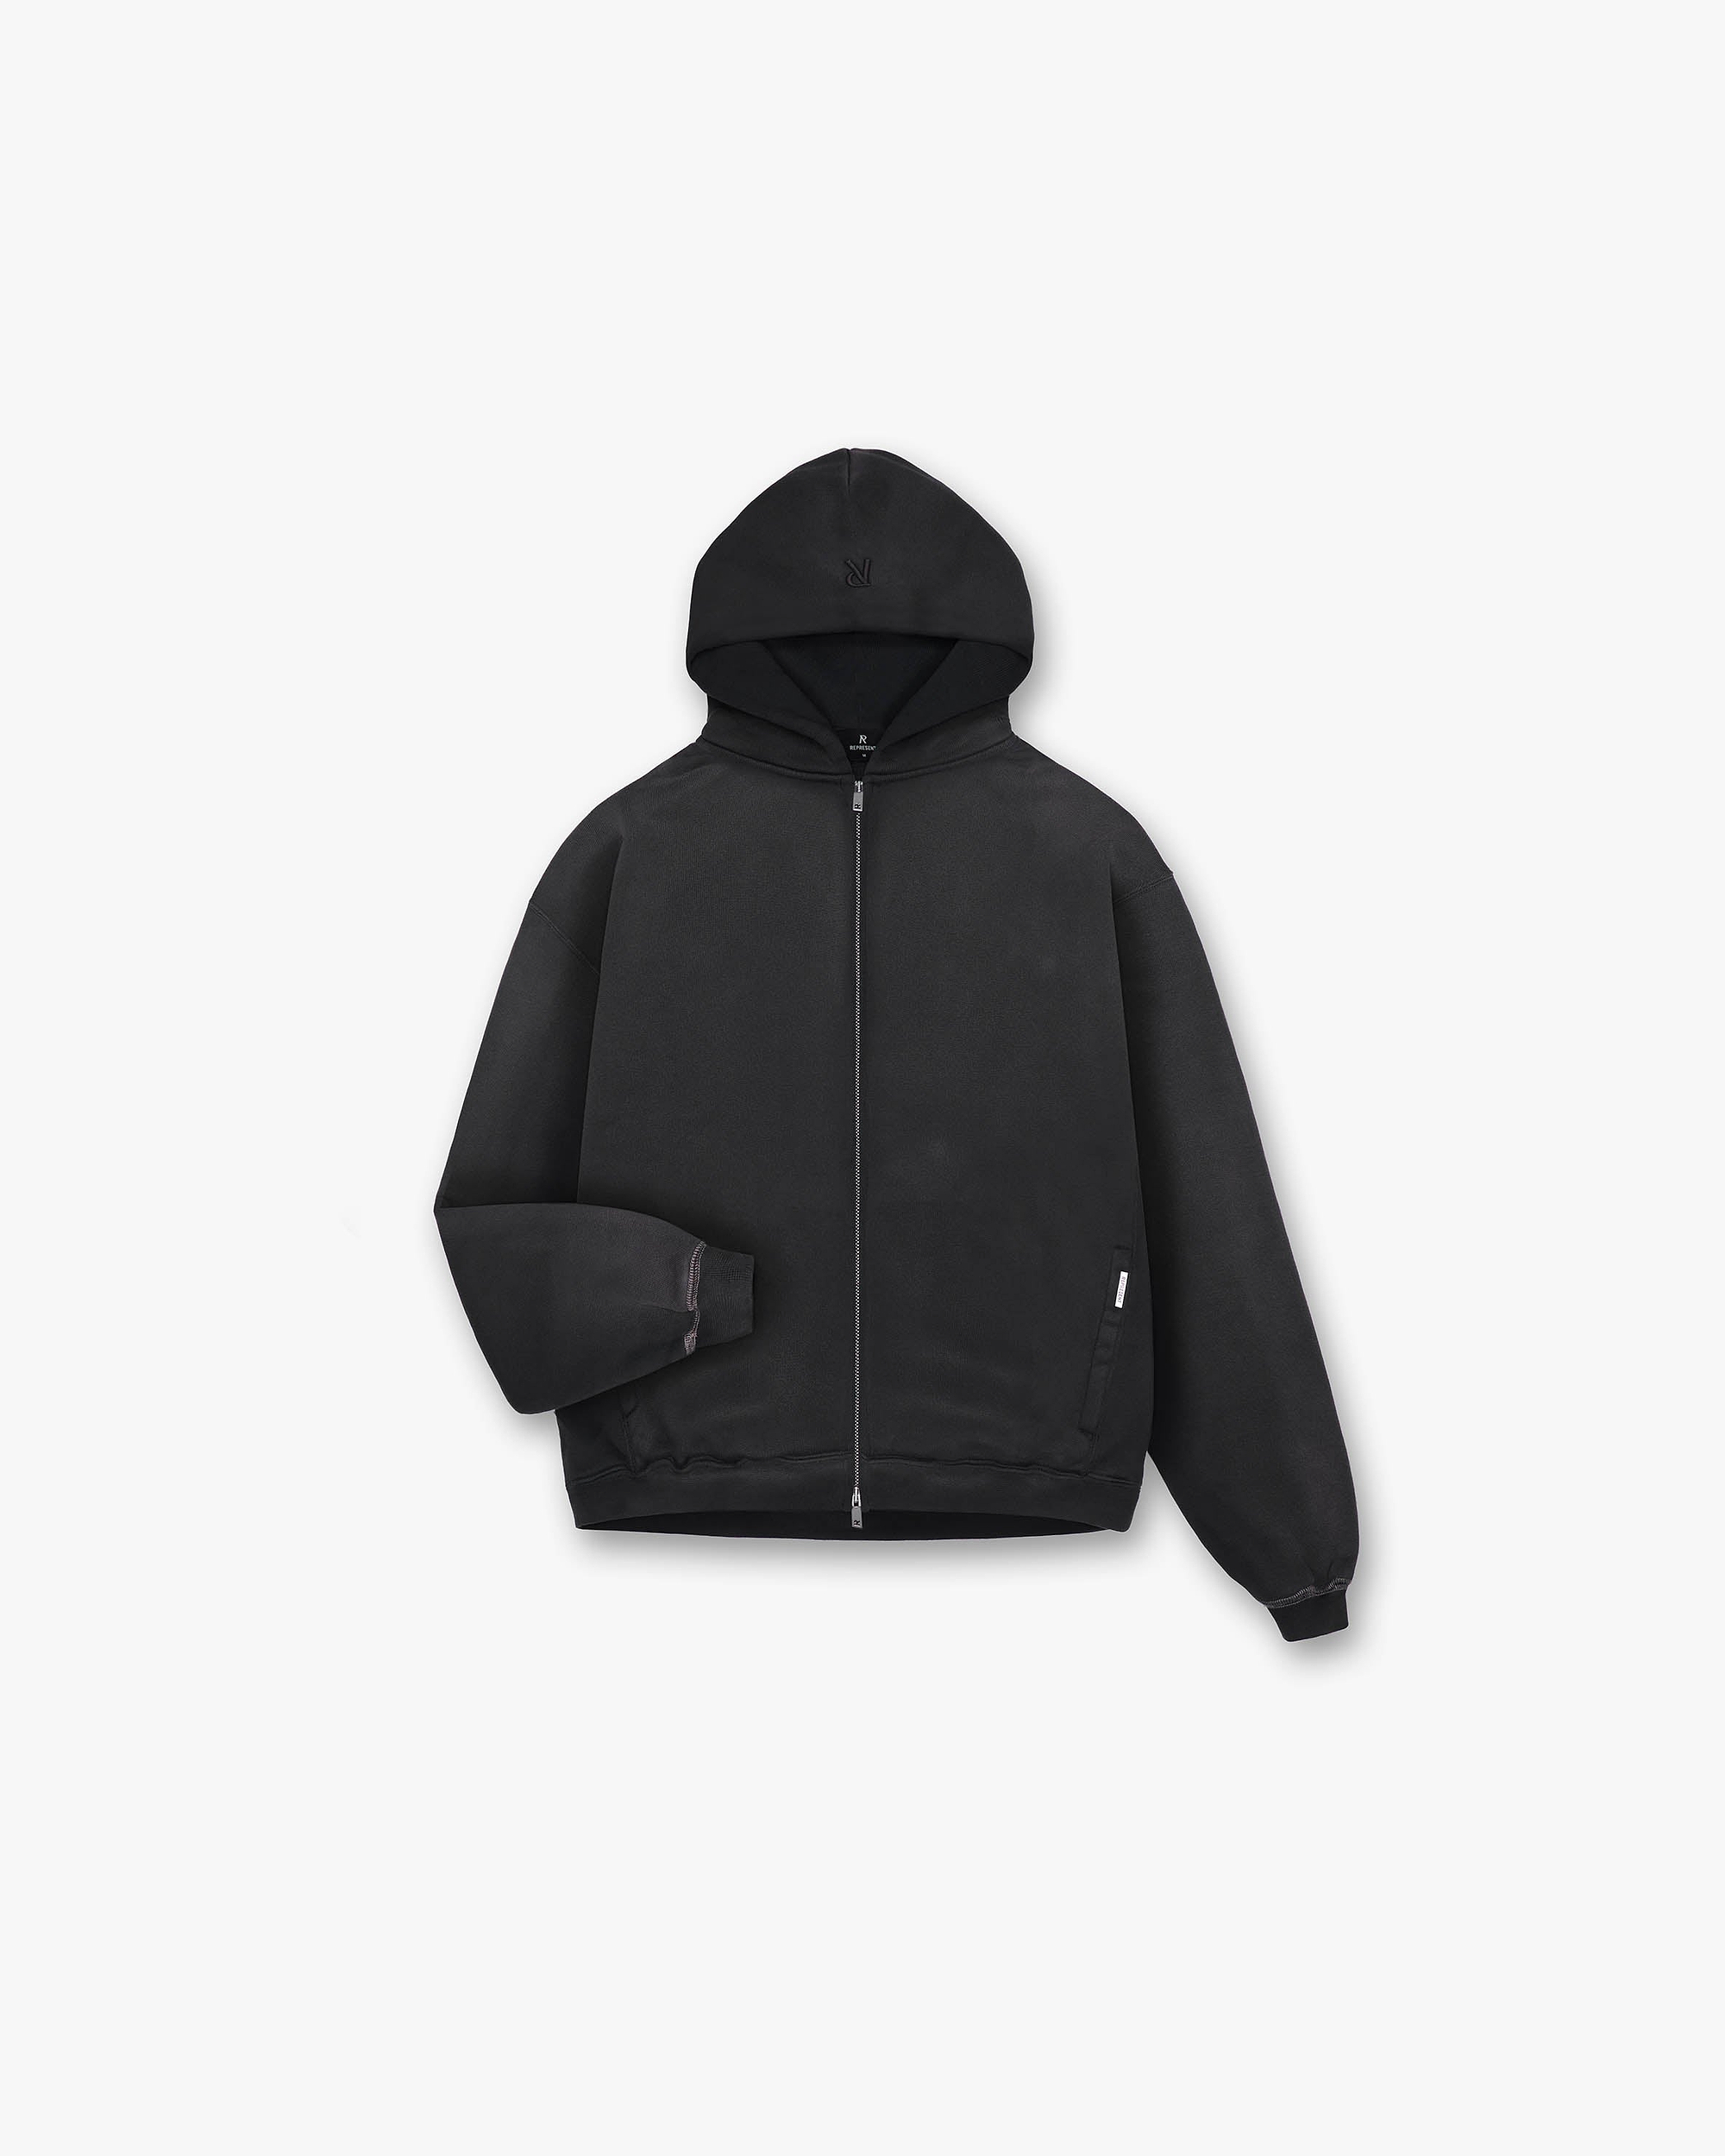 Buy Men's Black Hoodie with Minimalistic Charging Design